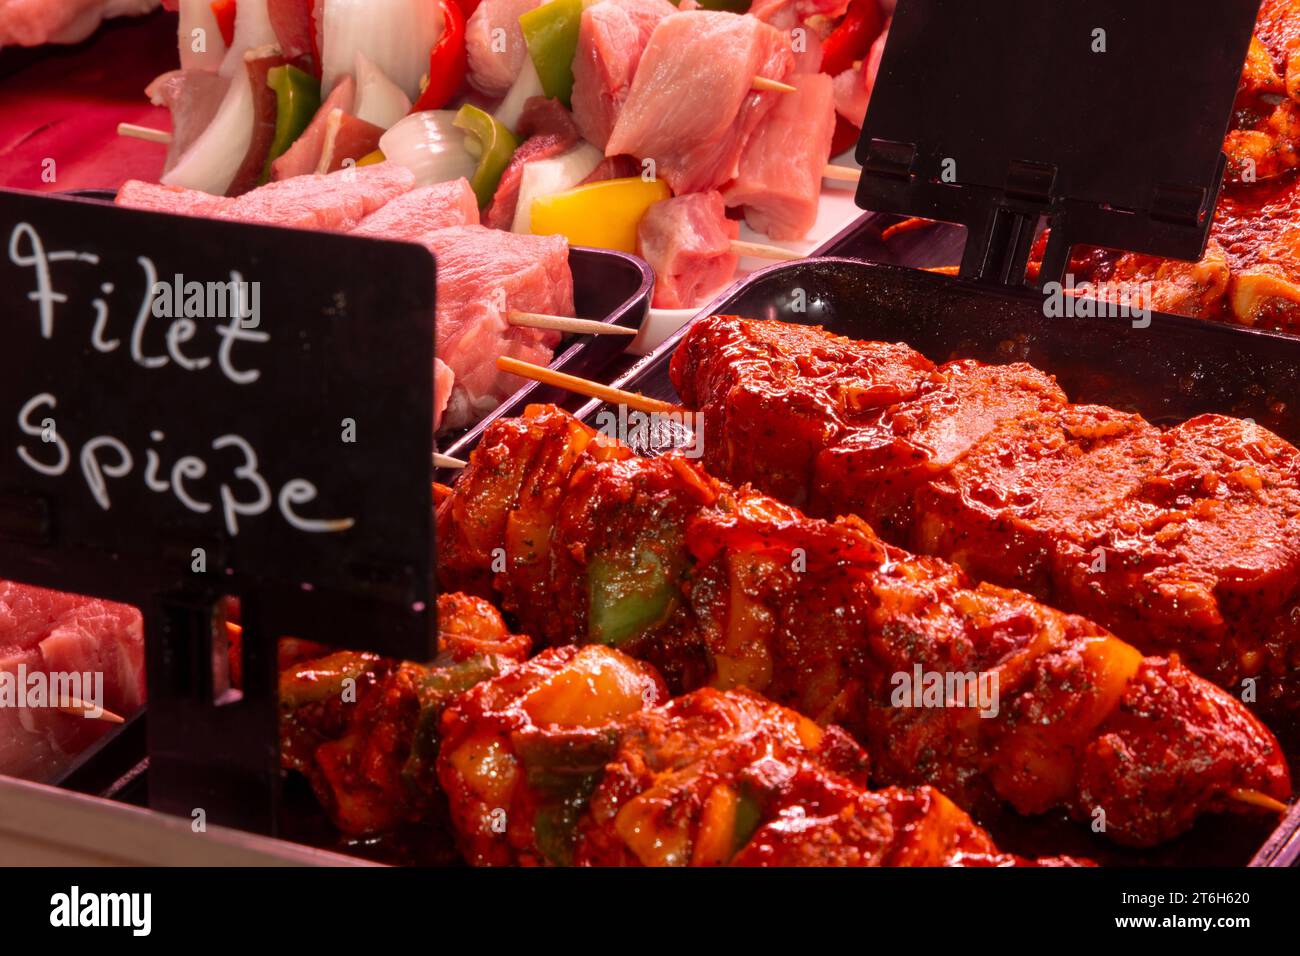 Fleischtheke in einer Metzgerei *** Meat counter in a butchers shop Copyright: xx Credit: Imago/Alamy Live News Stock Photo